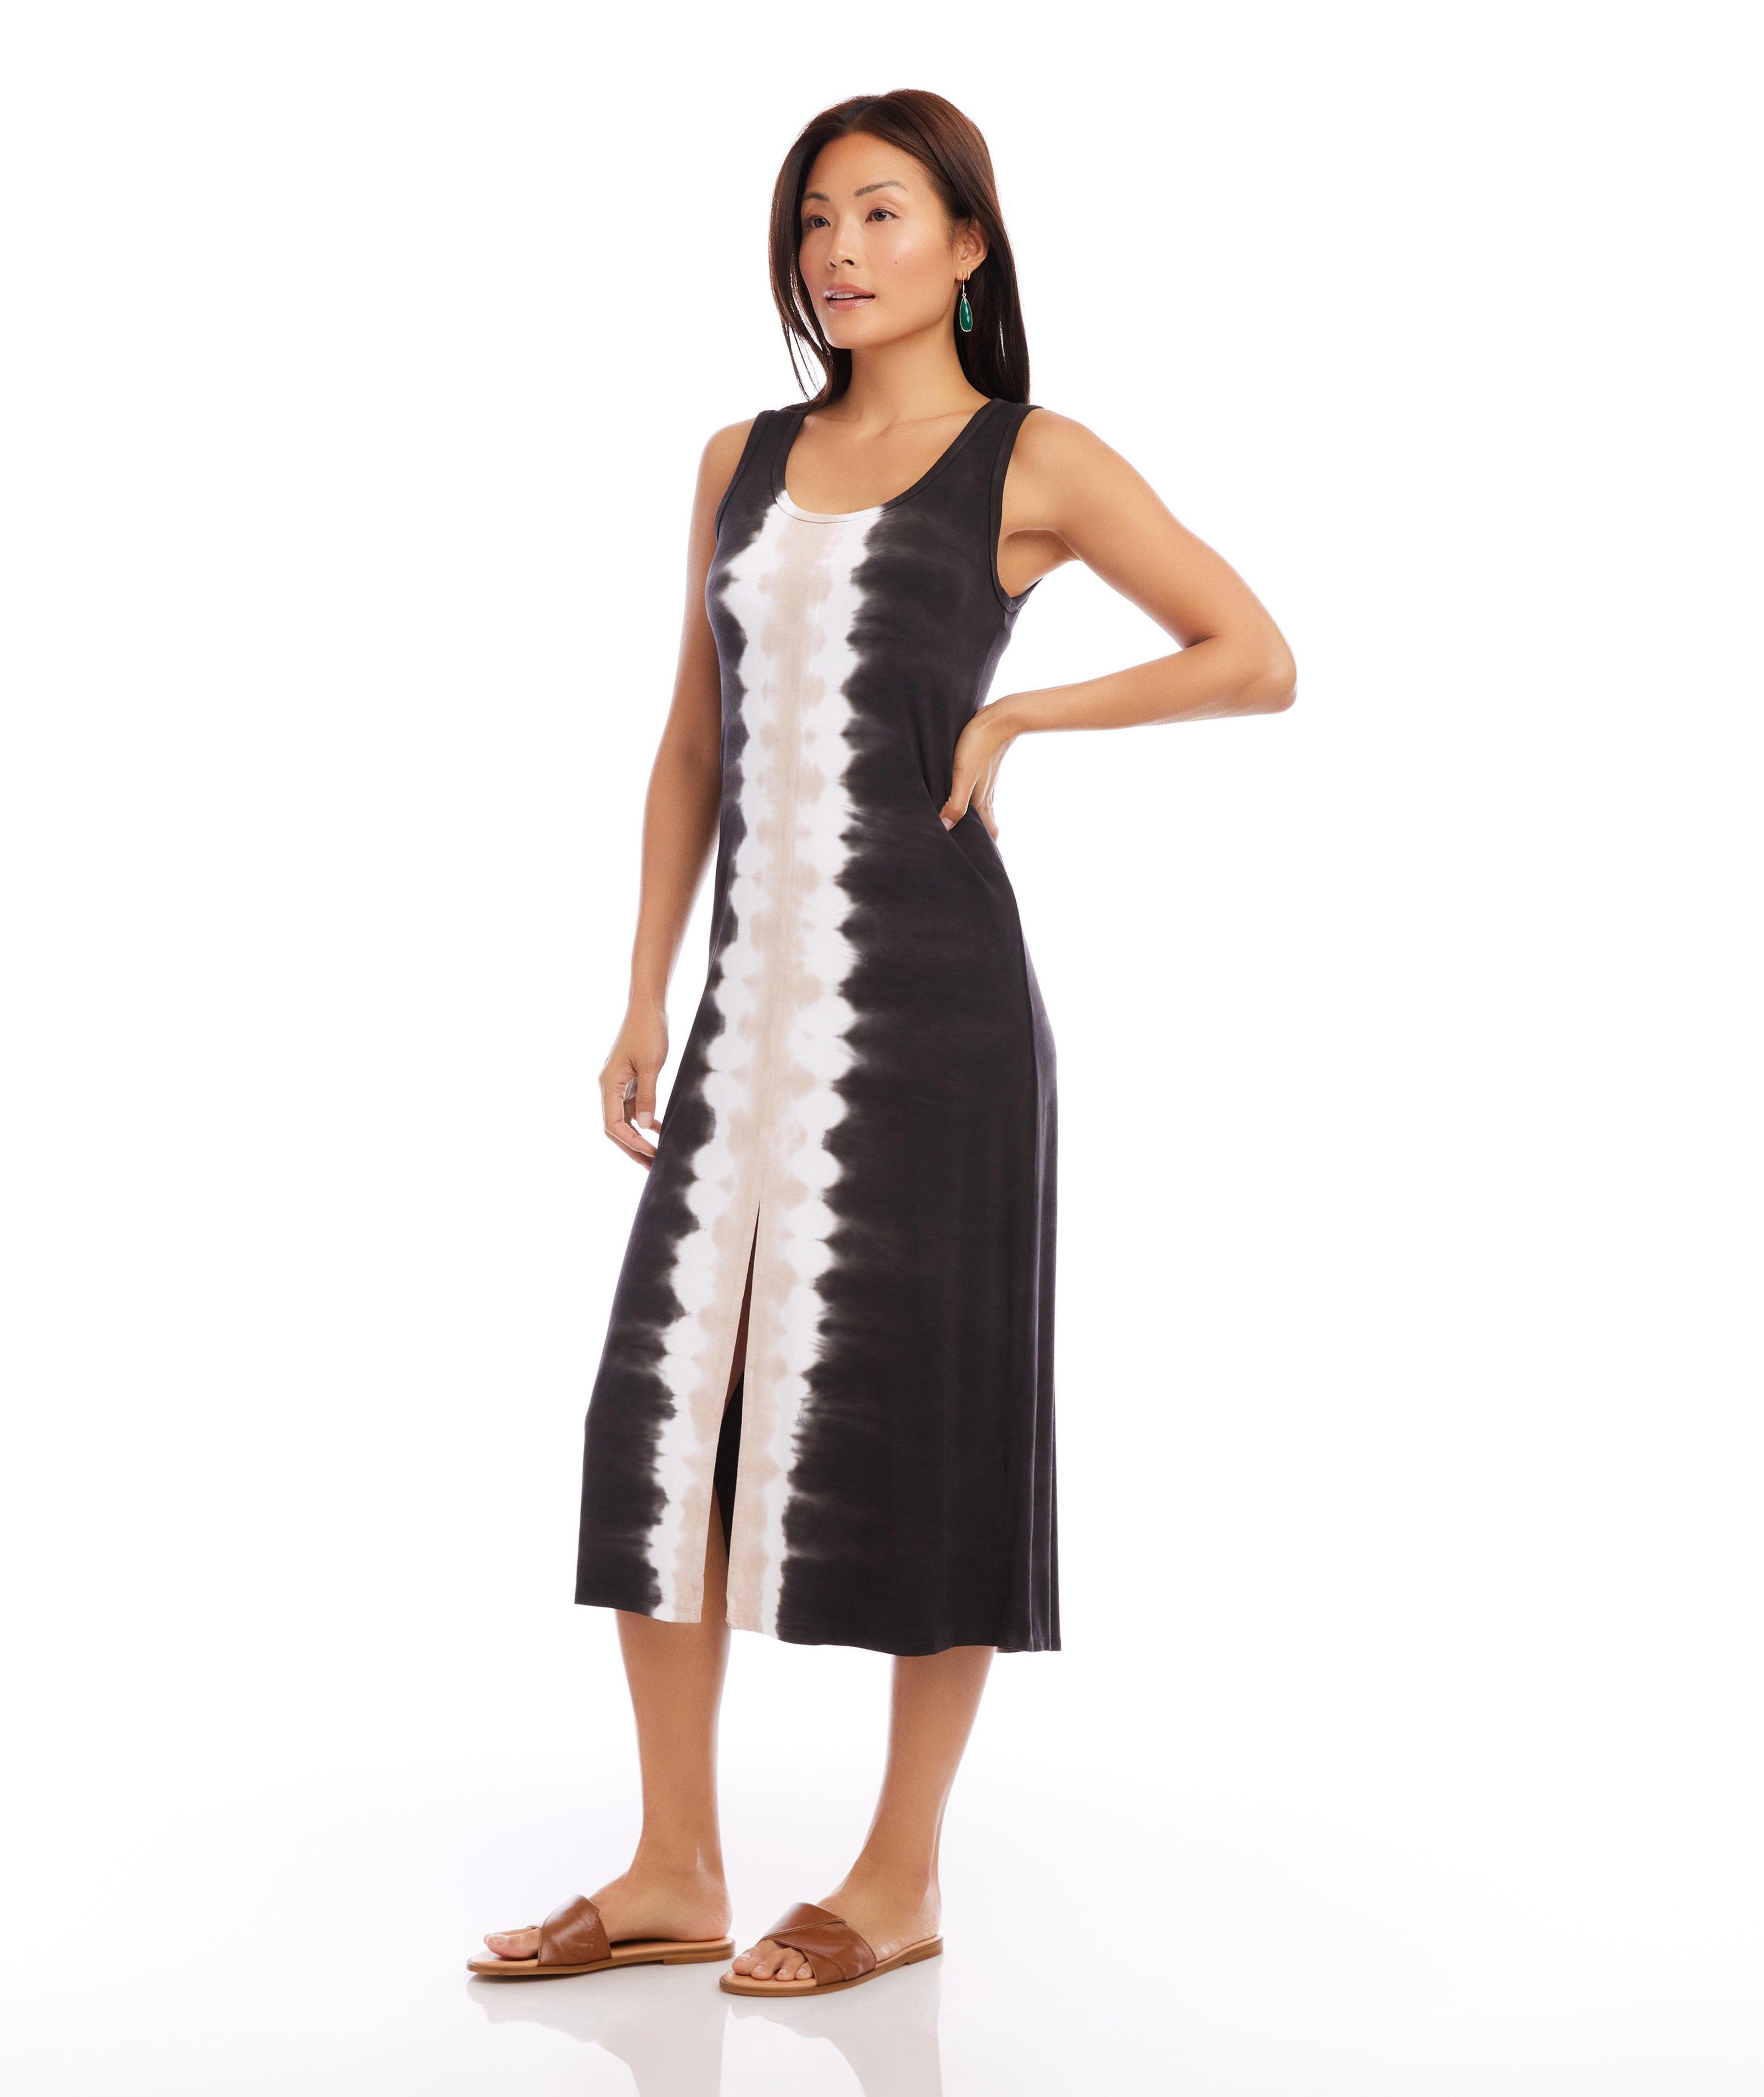 Karen Kane Tie Dye Scoop Neck Sleeveless Midi Dress Product Image